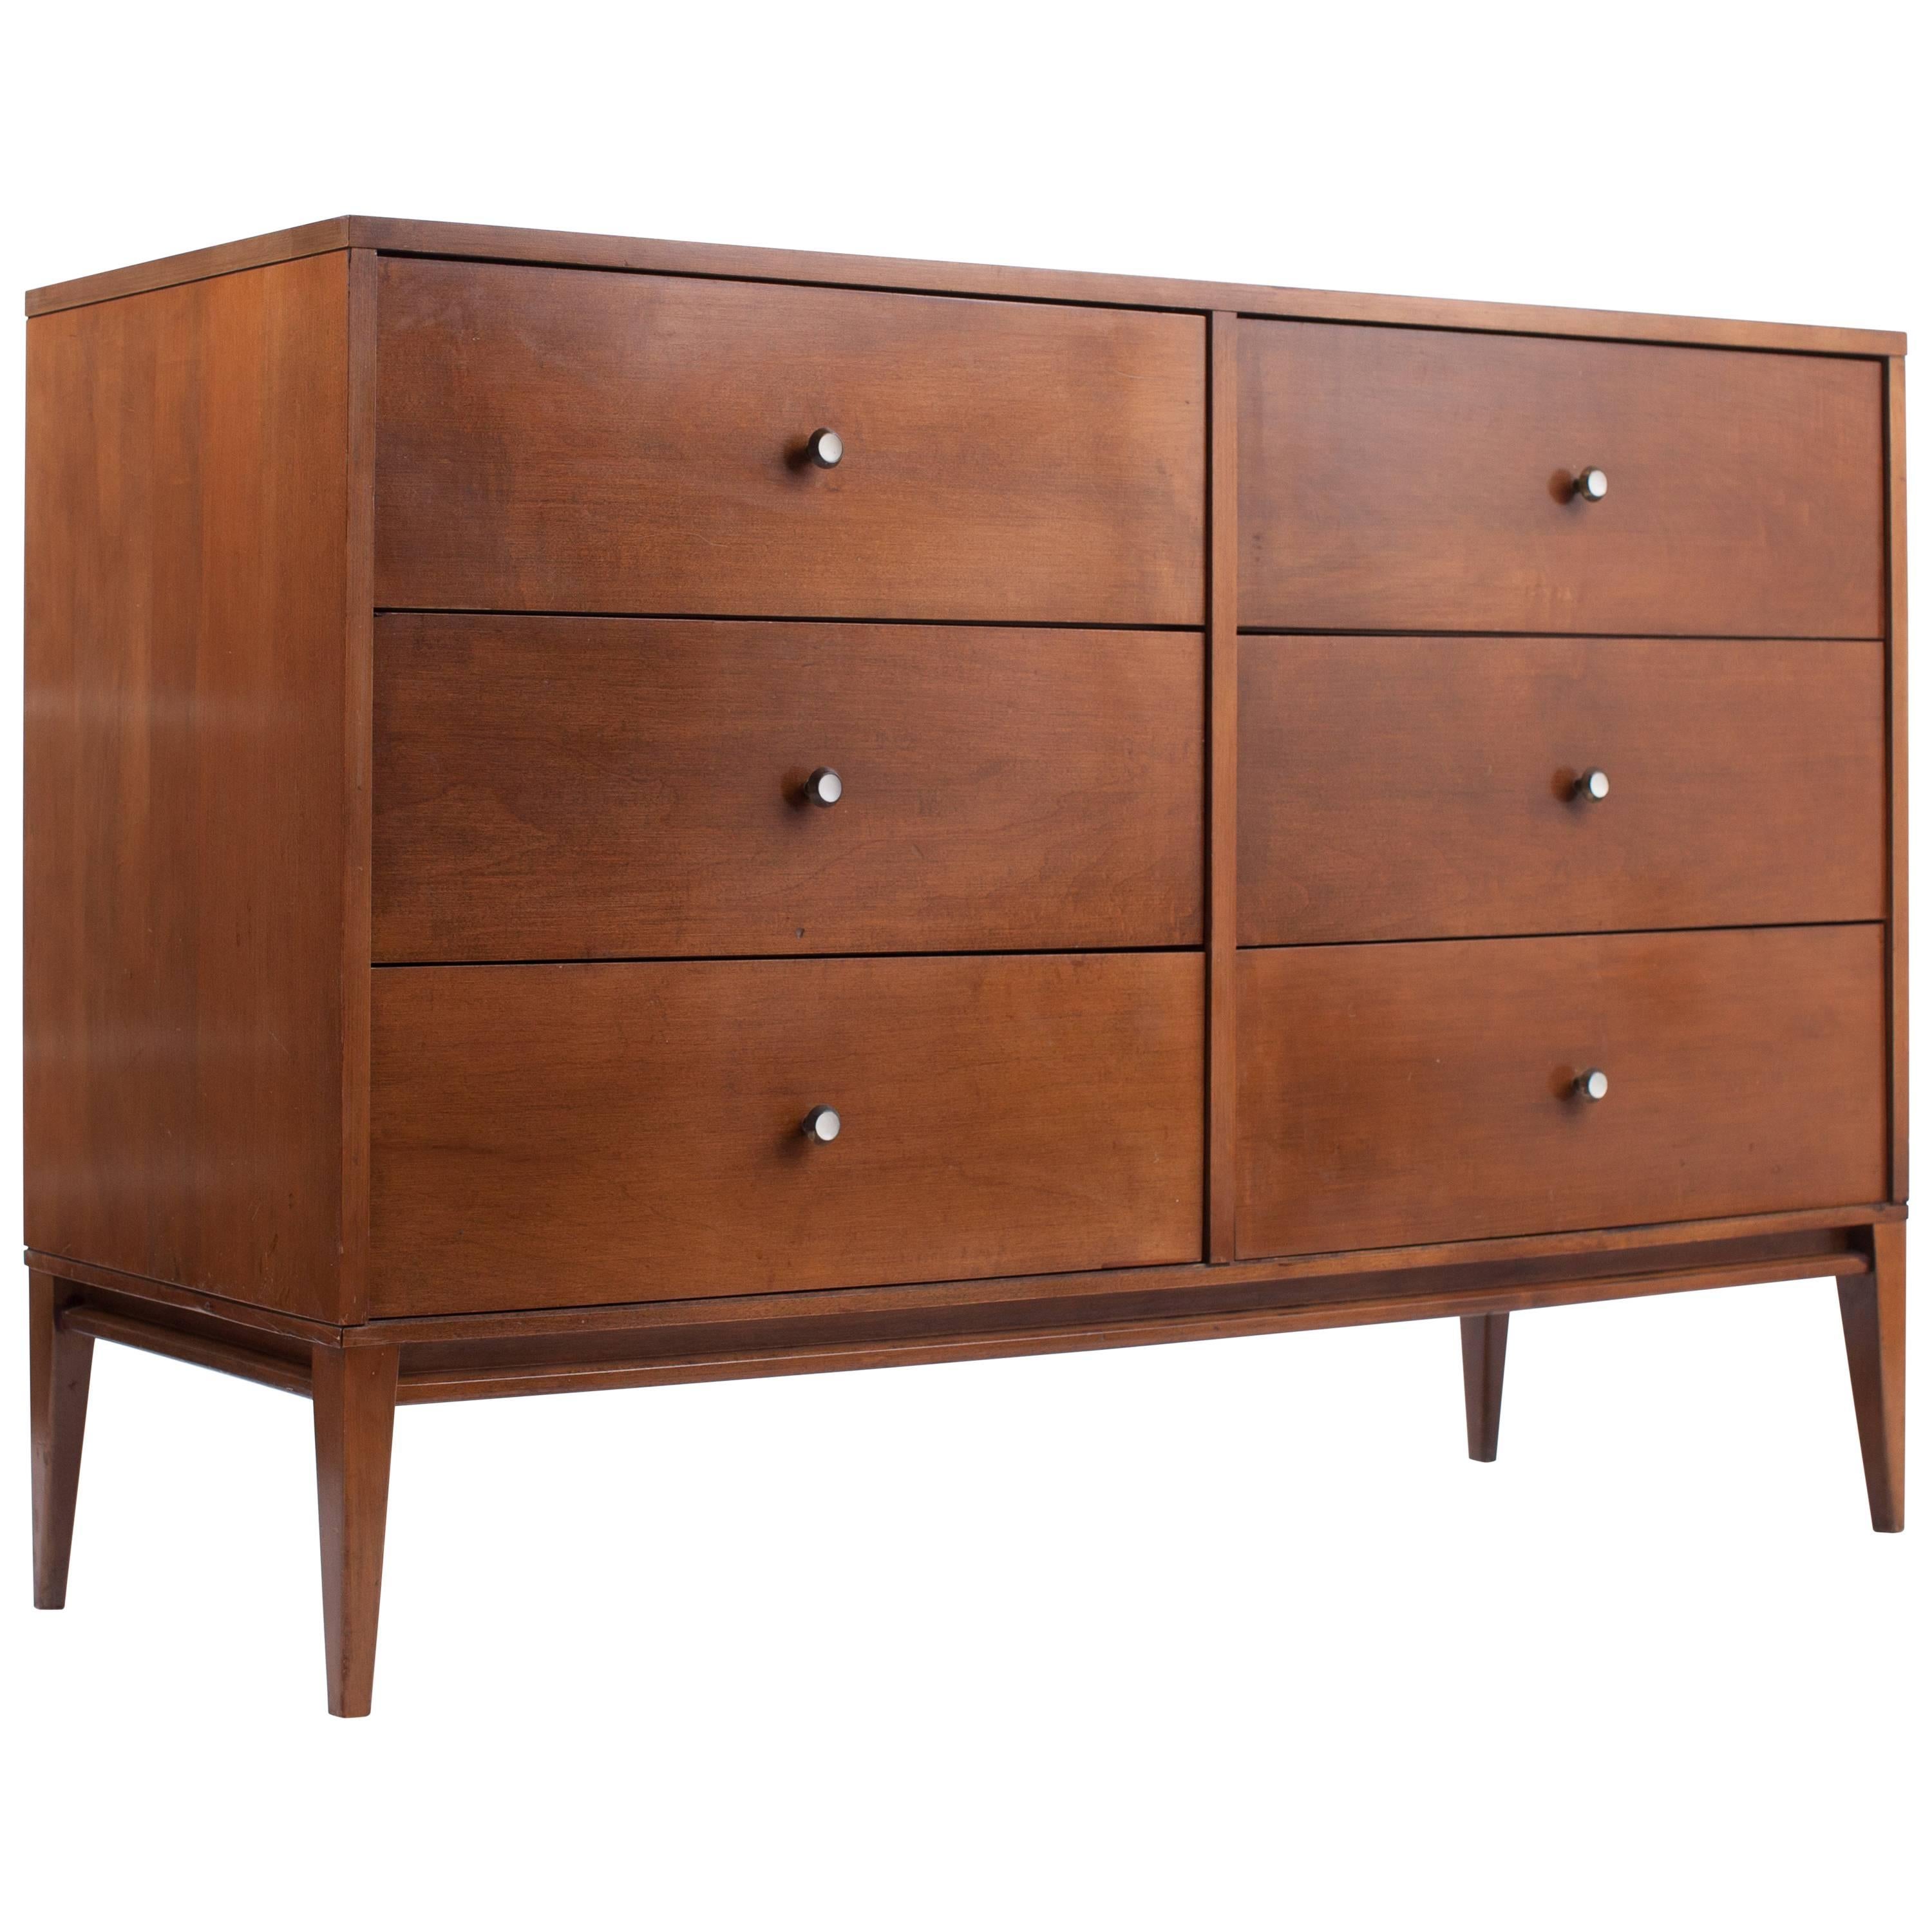 Graceful Paul McCobb Planner Group Six-Drawer Dresser in Maple, American 1950's